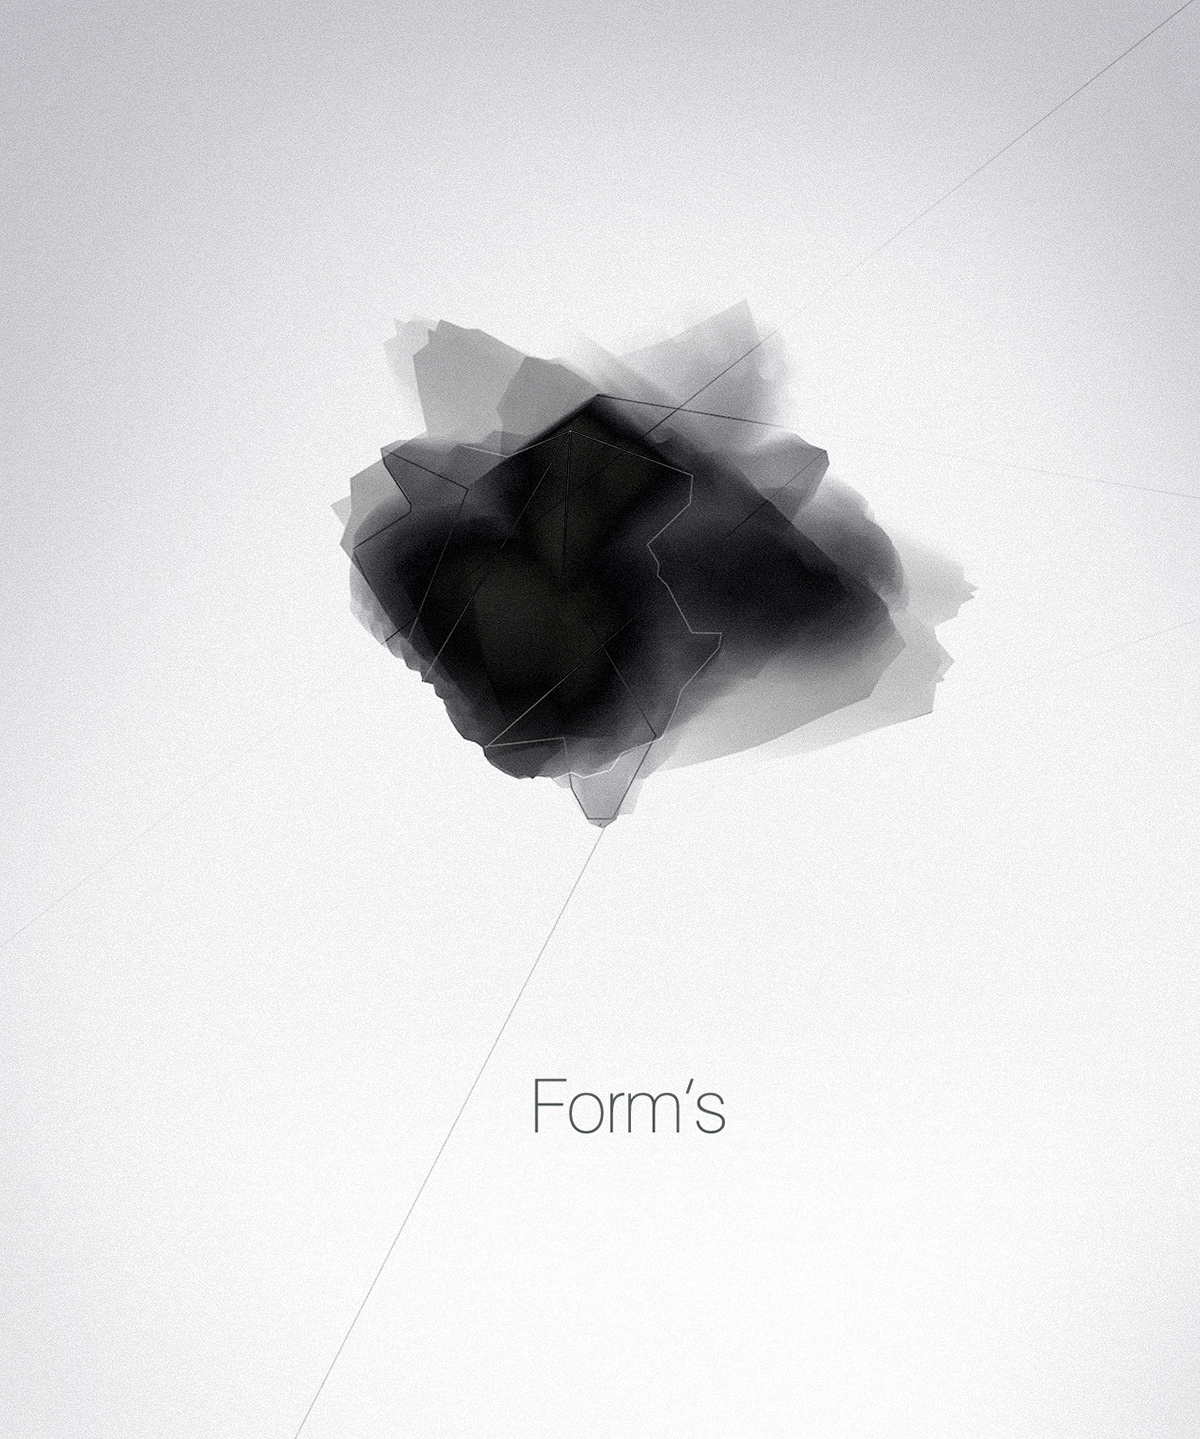 Forms  digital art  3d  szymon pawlik  dislog  dislog studio  art  design  Graphic